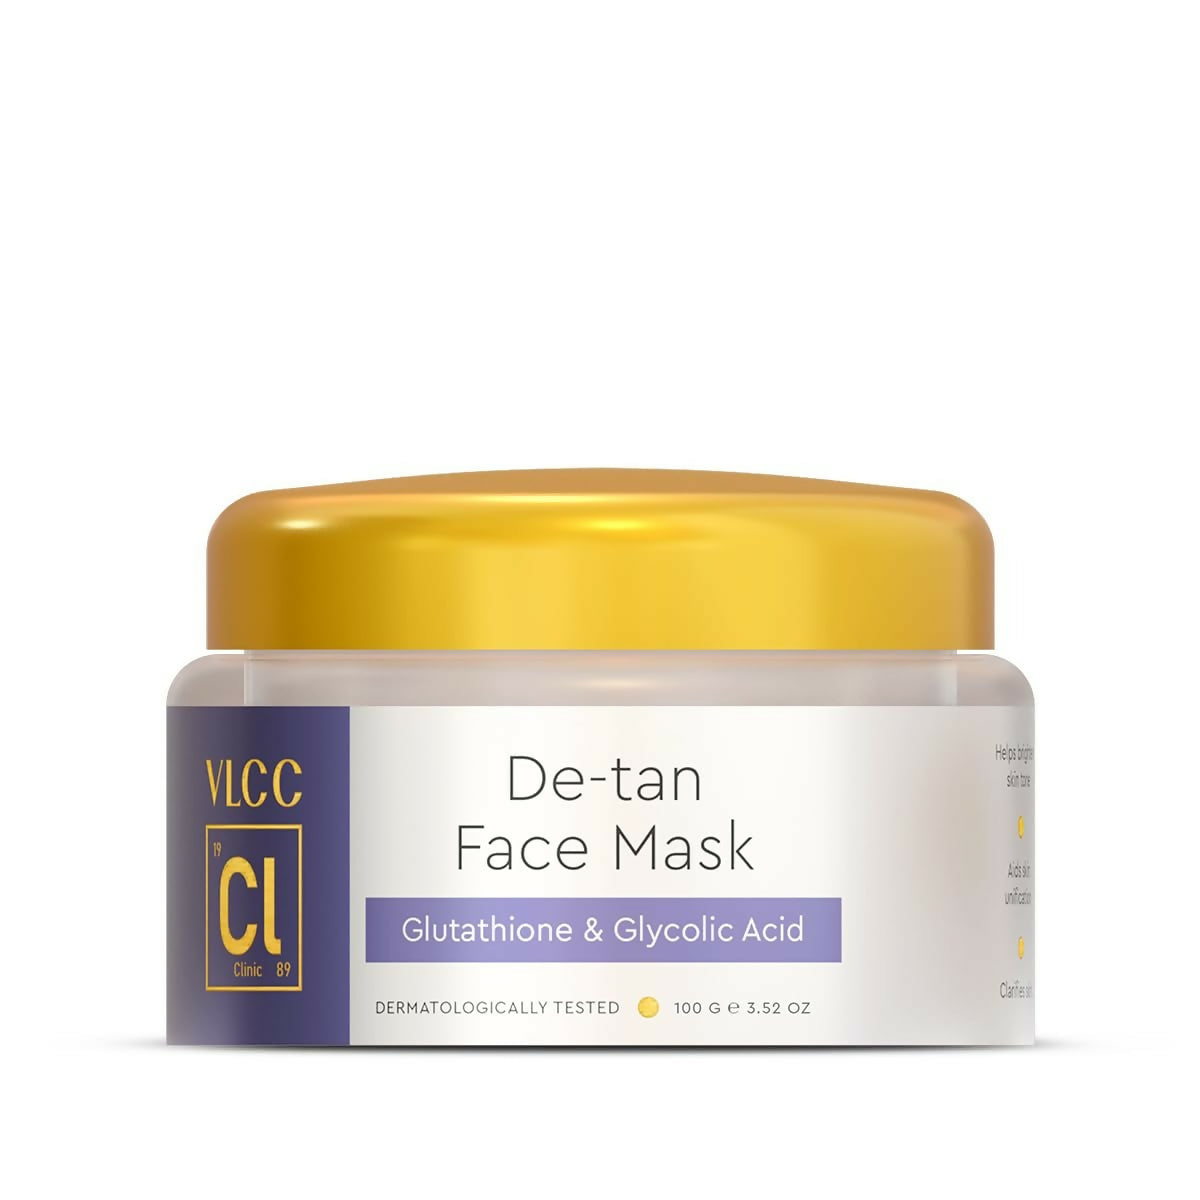 VLCC Clinic De-Tan Face Mask with Glutathione + Glycolic Acid